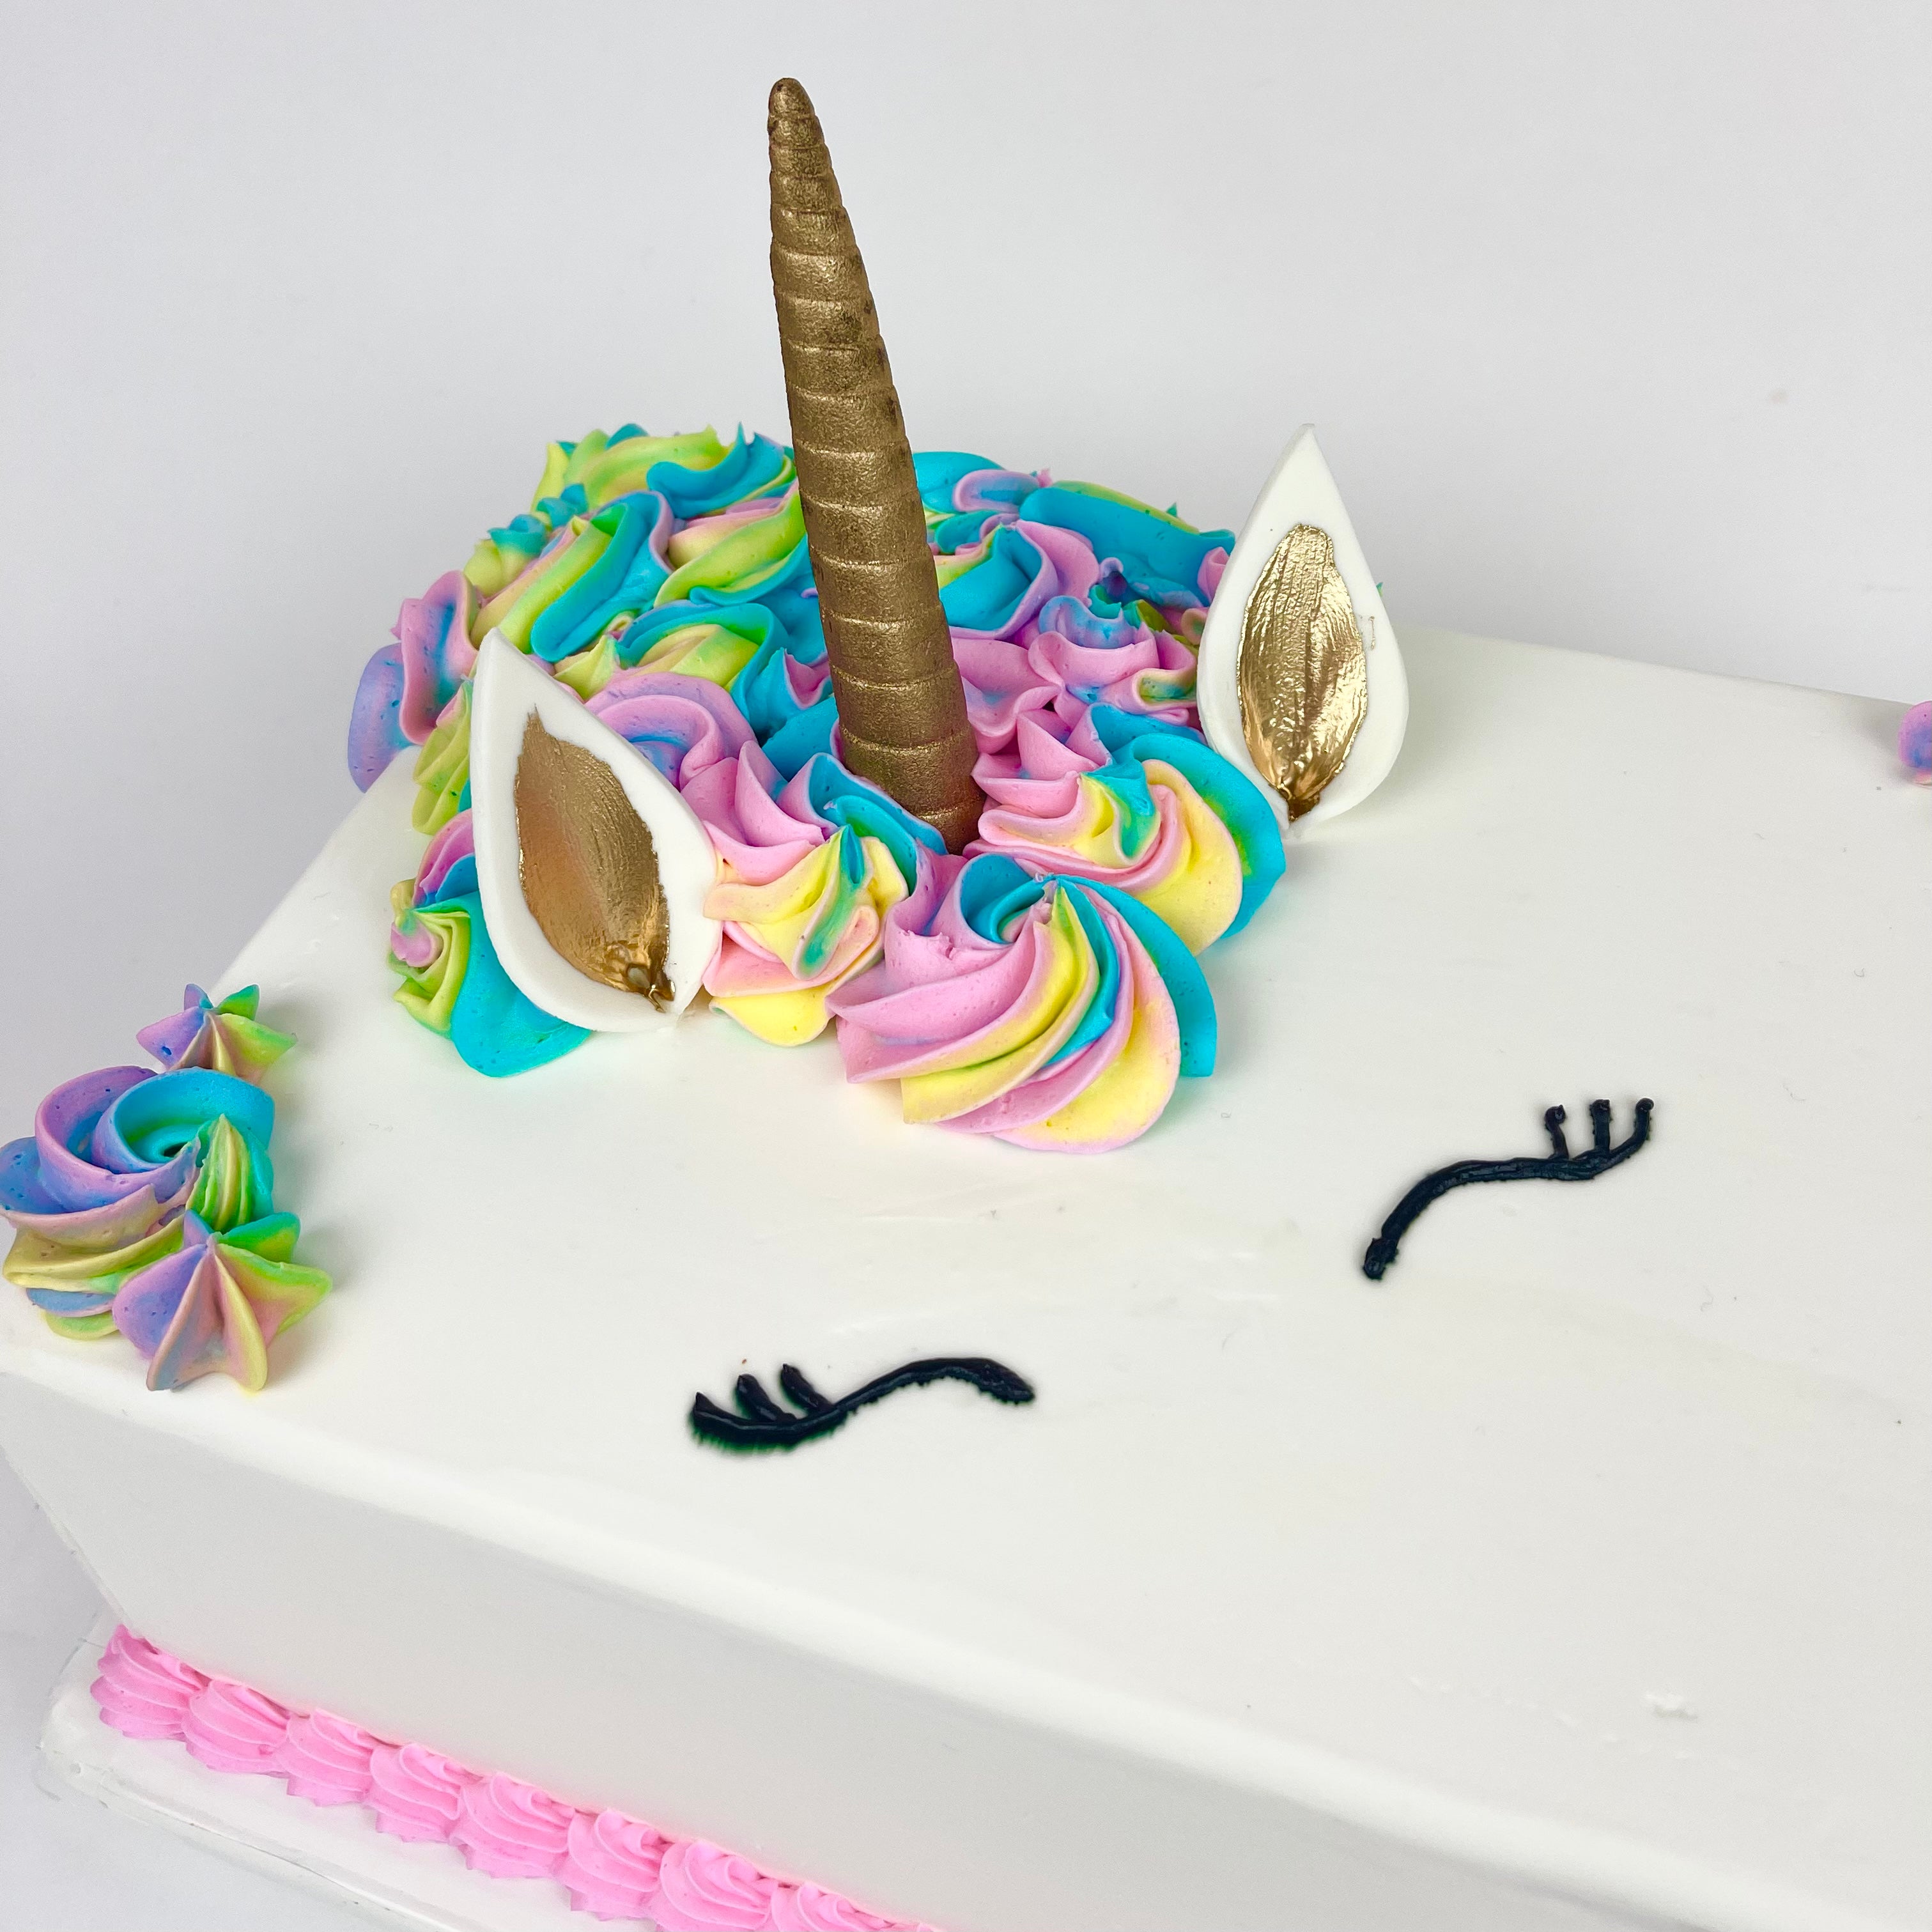 Magical Unicorn Sheet Cake